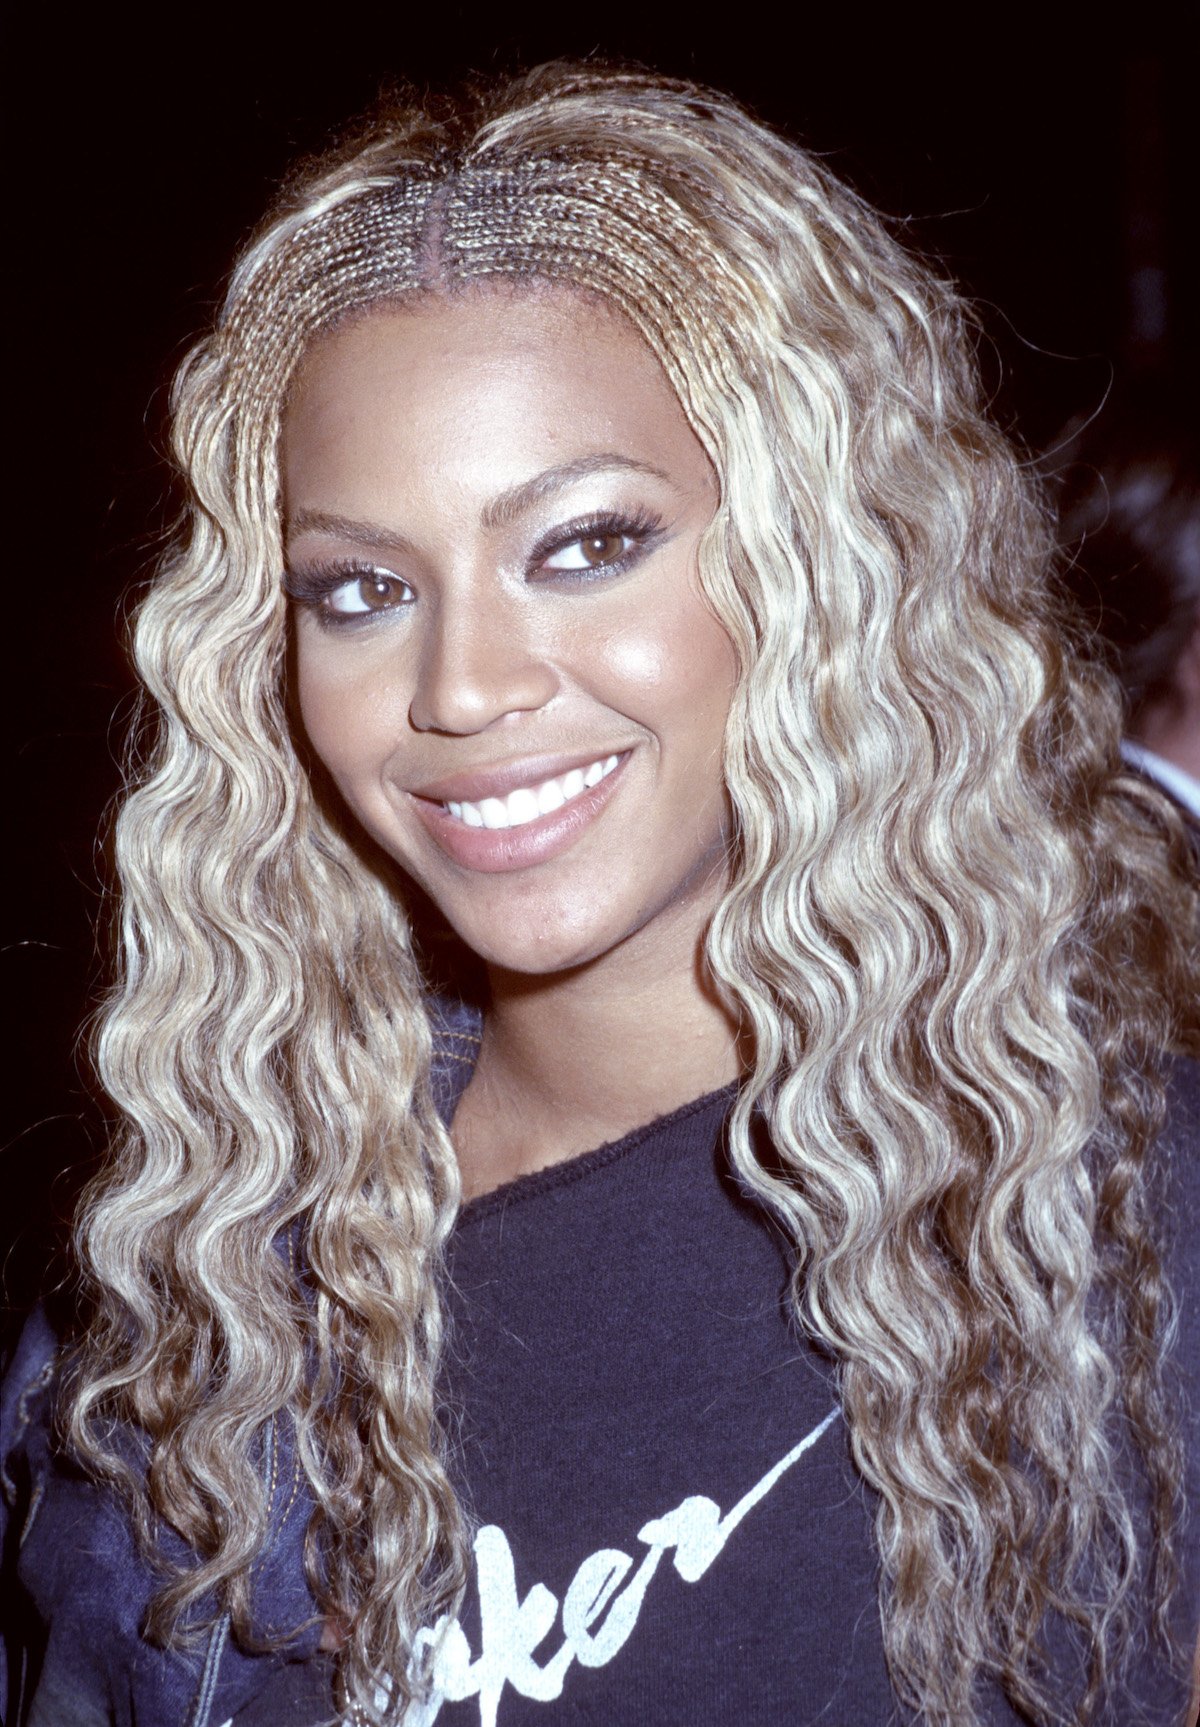 Beyoncé smiles on the red carpet